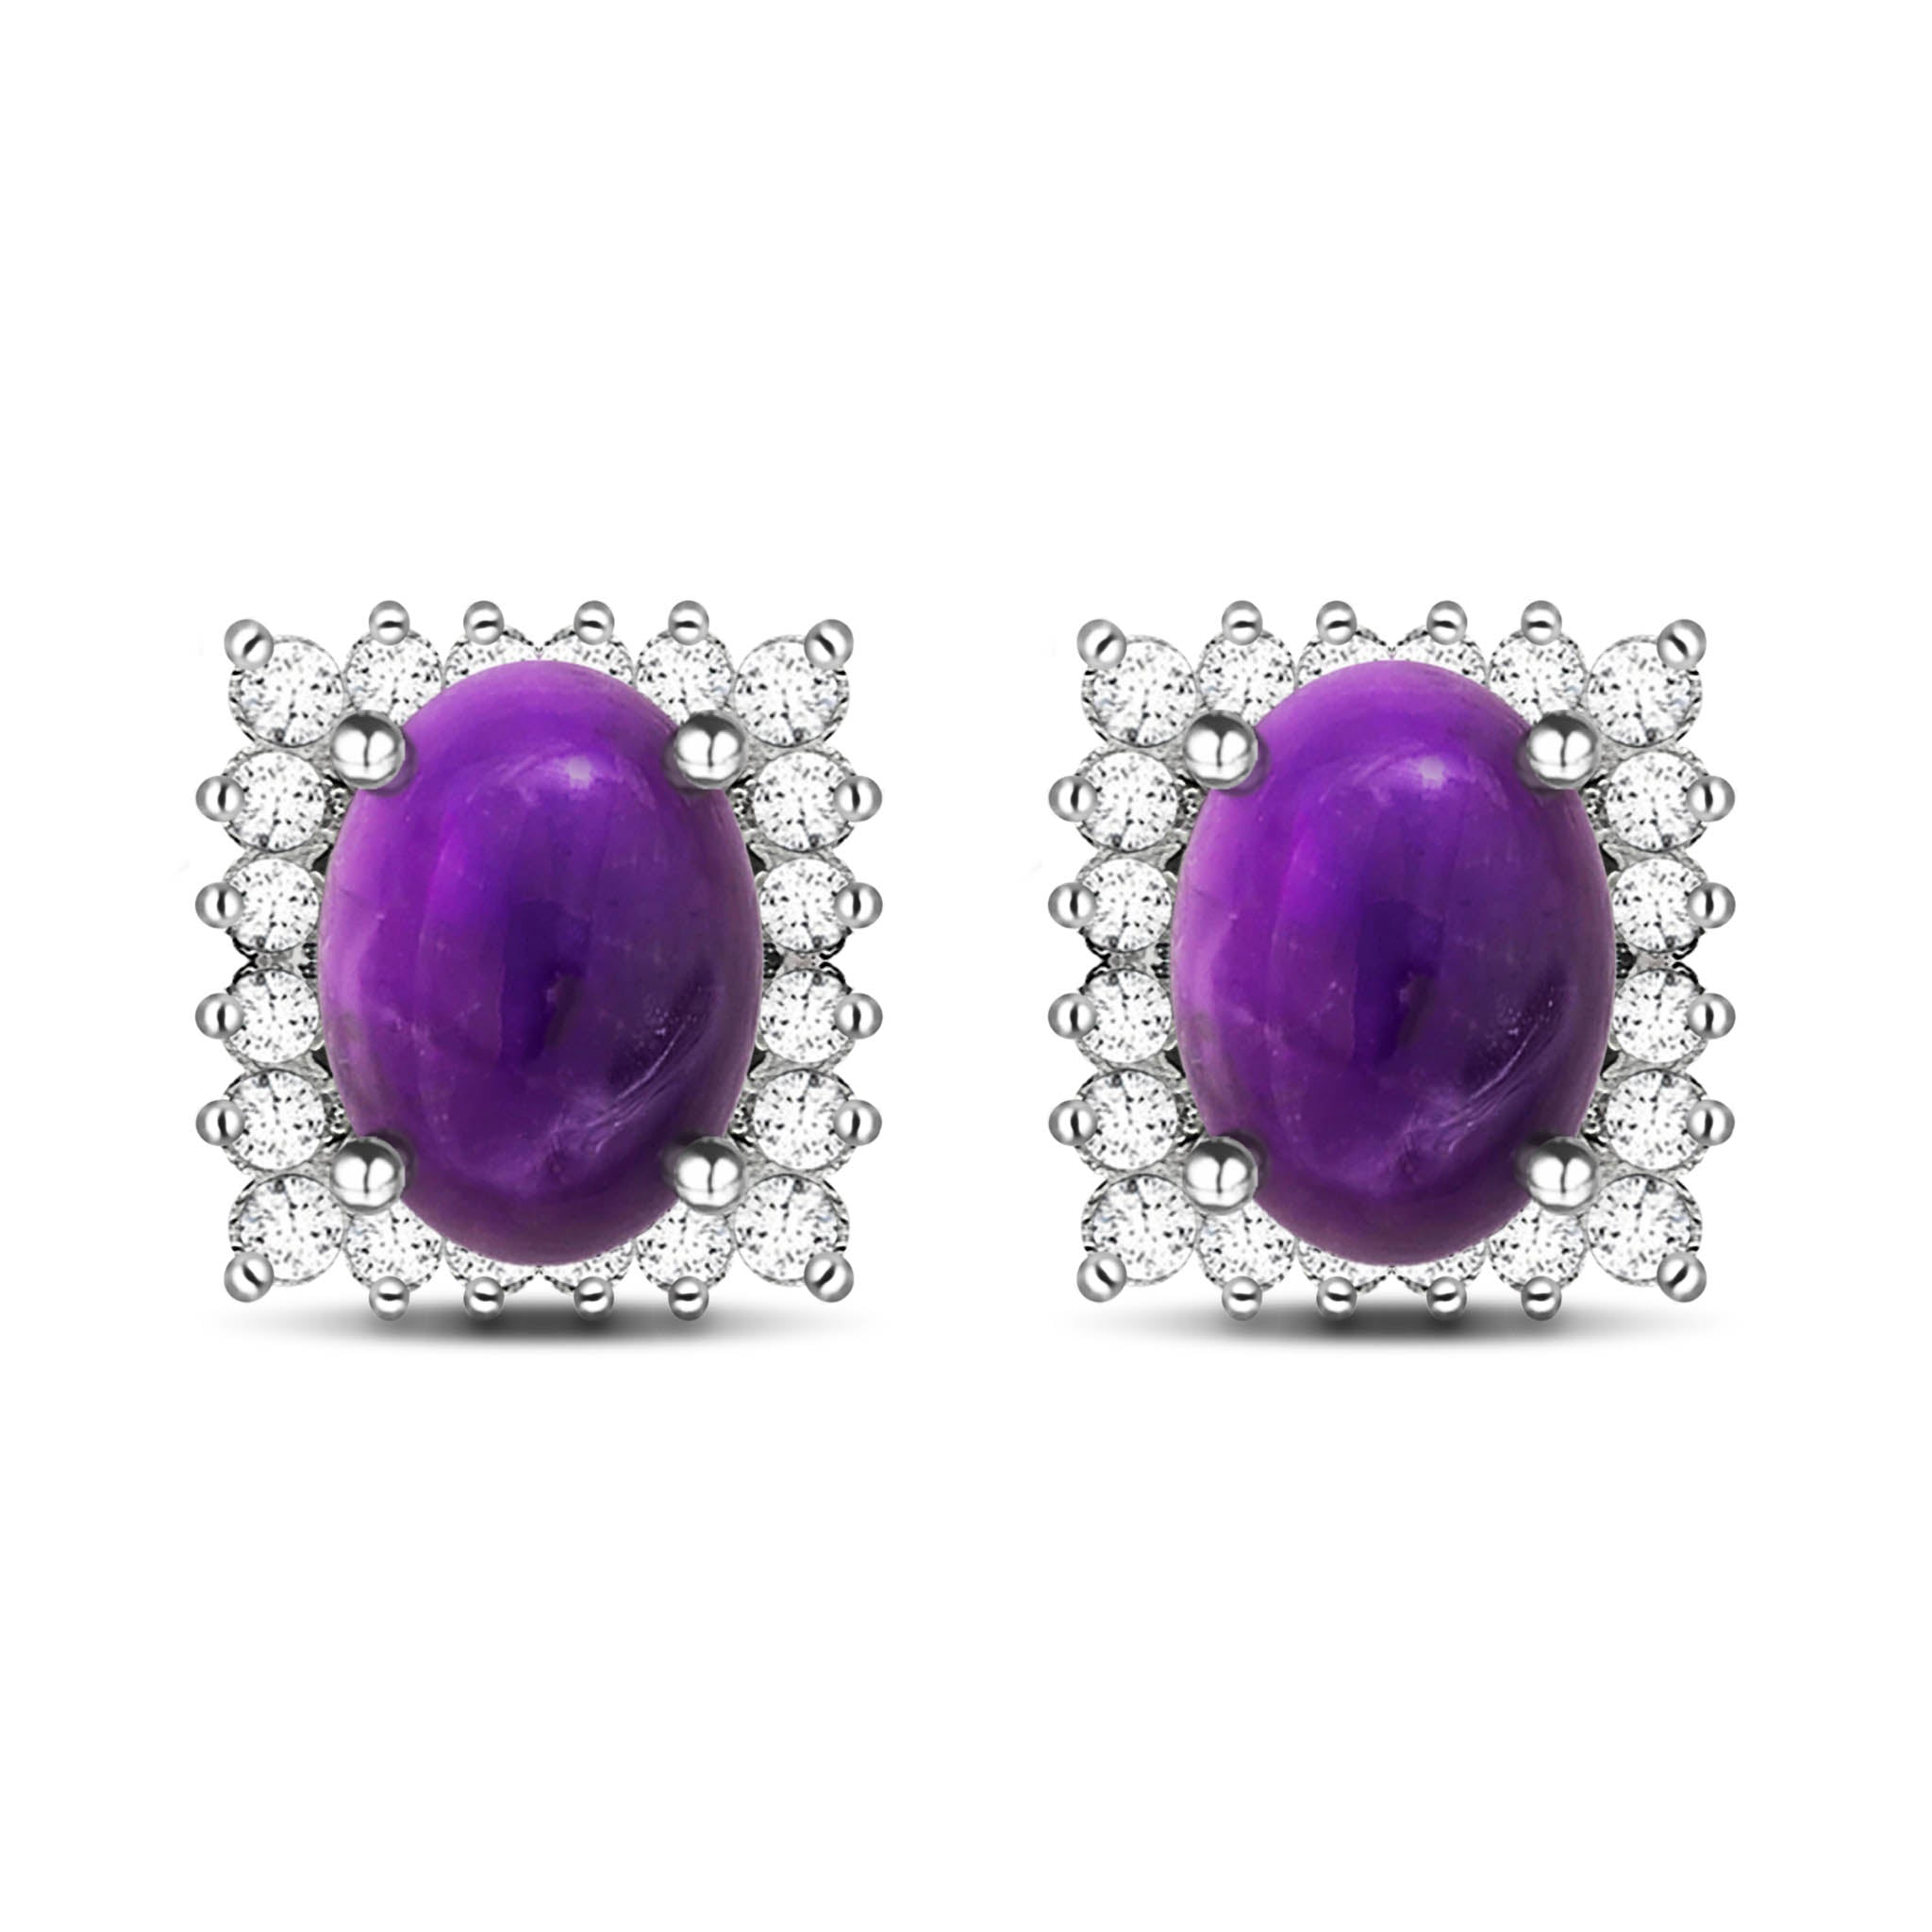 Alluring Natural Cabochon Purple Amethyst Sterling Silver Stud Earrings